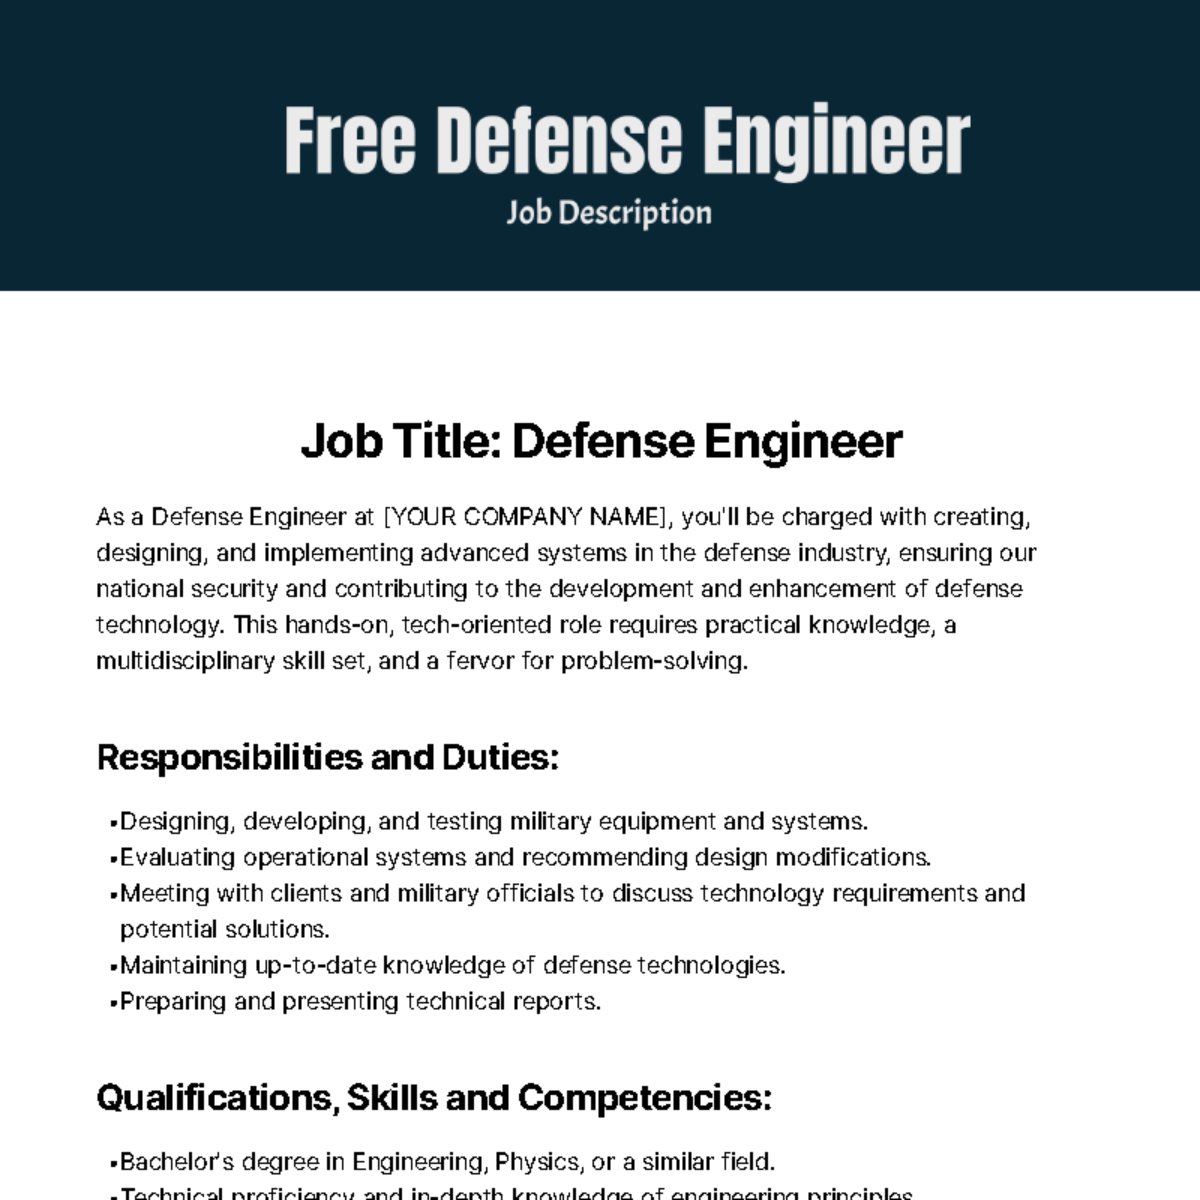 Free Defense Engineer Job Description Template